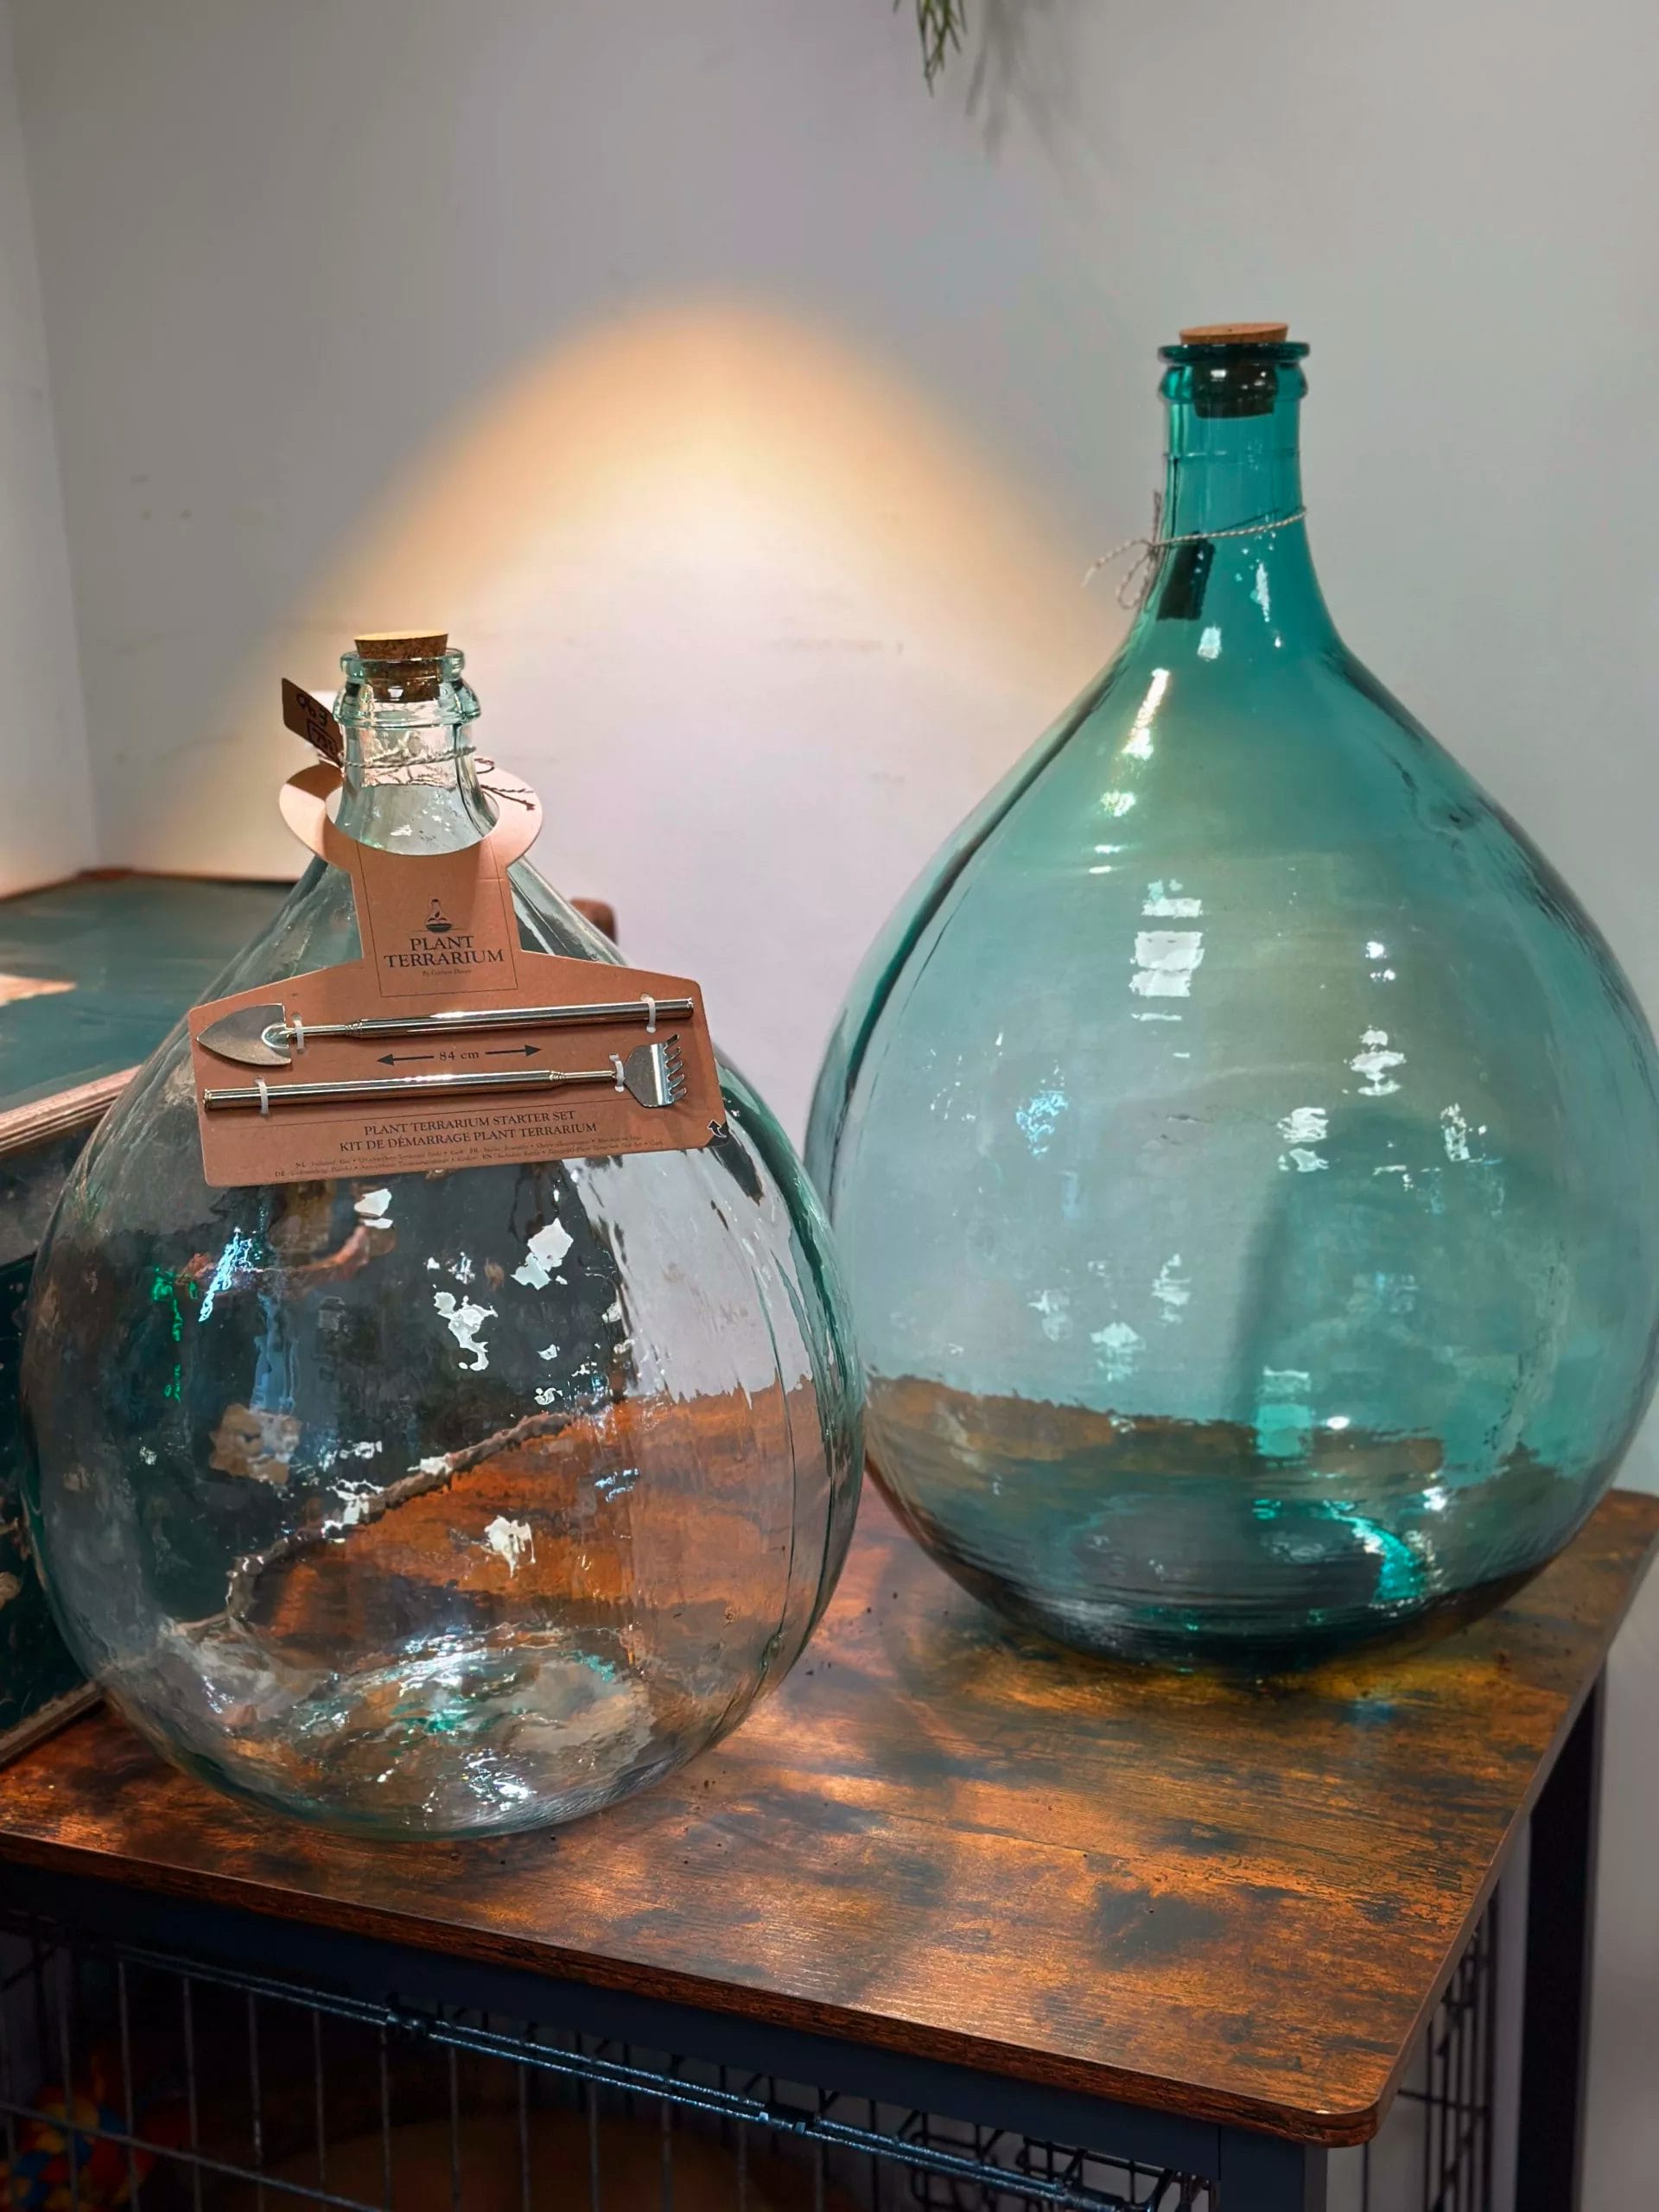 Terrarium Lids: How to Find Glass, Cork & Custom Options